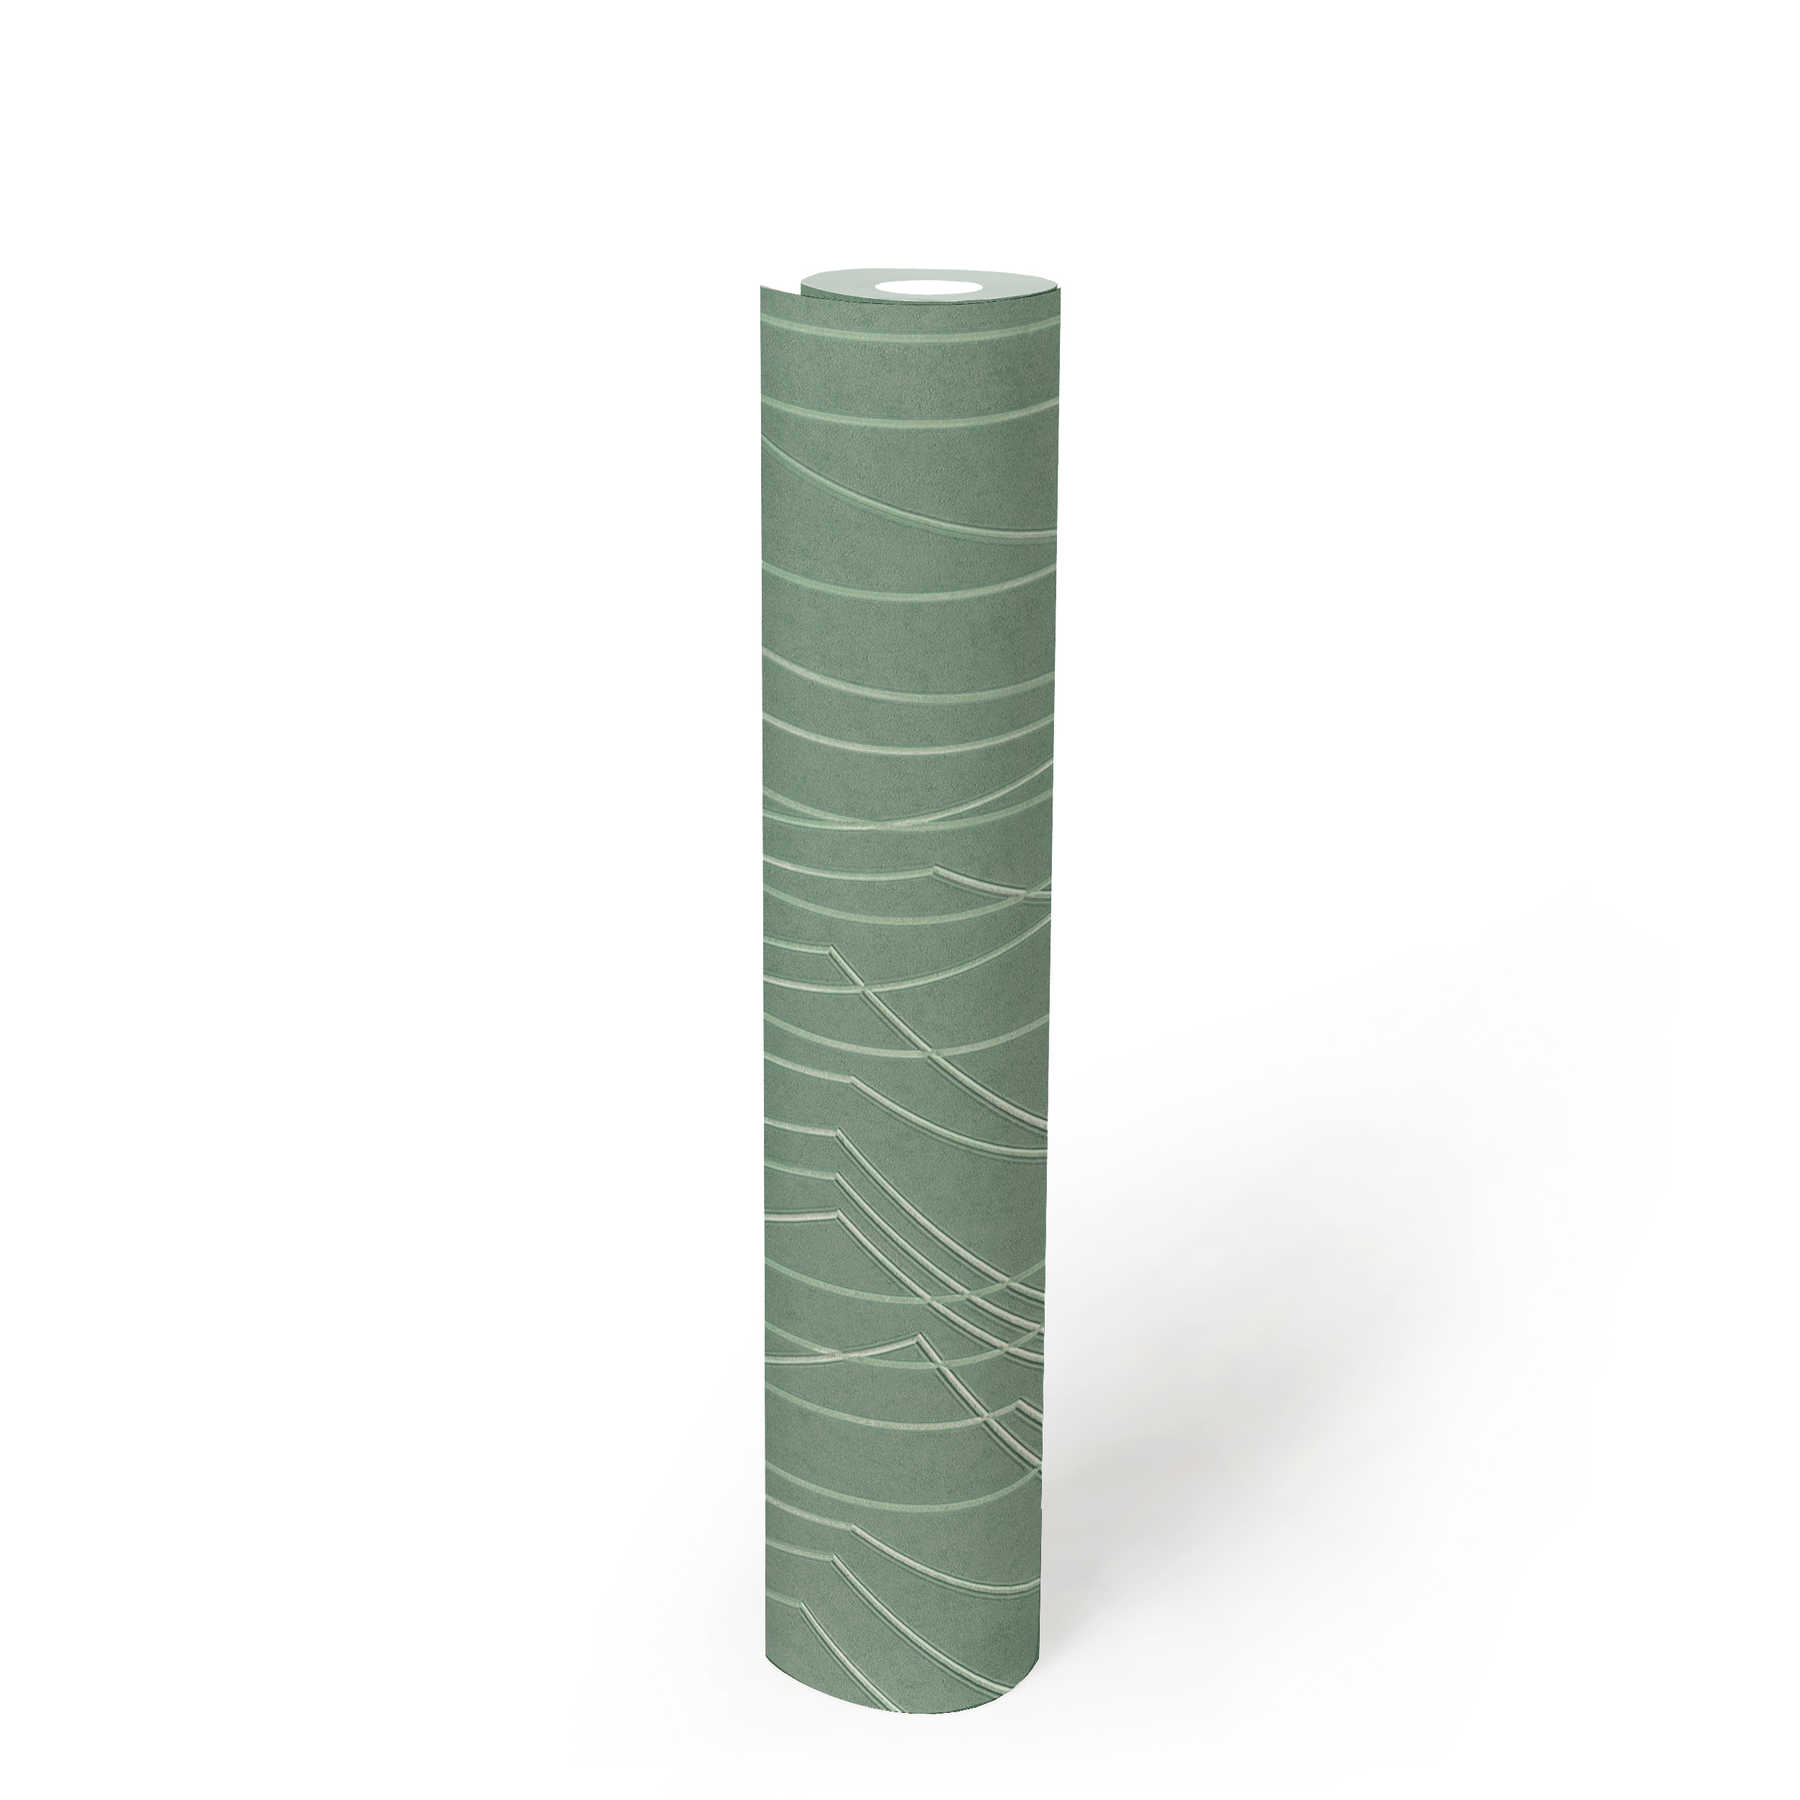             Grüne Vliestapete mit geprägtem Muster – Grün
        